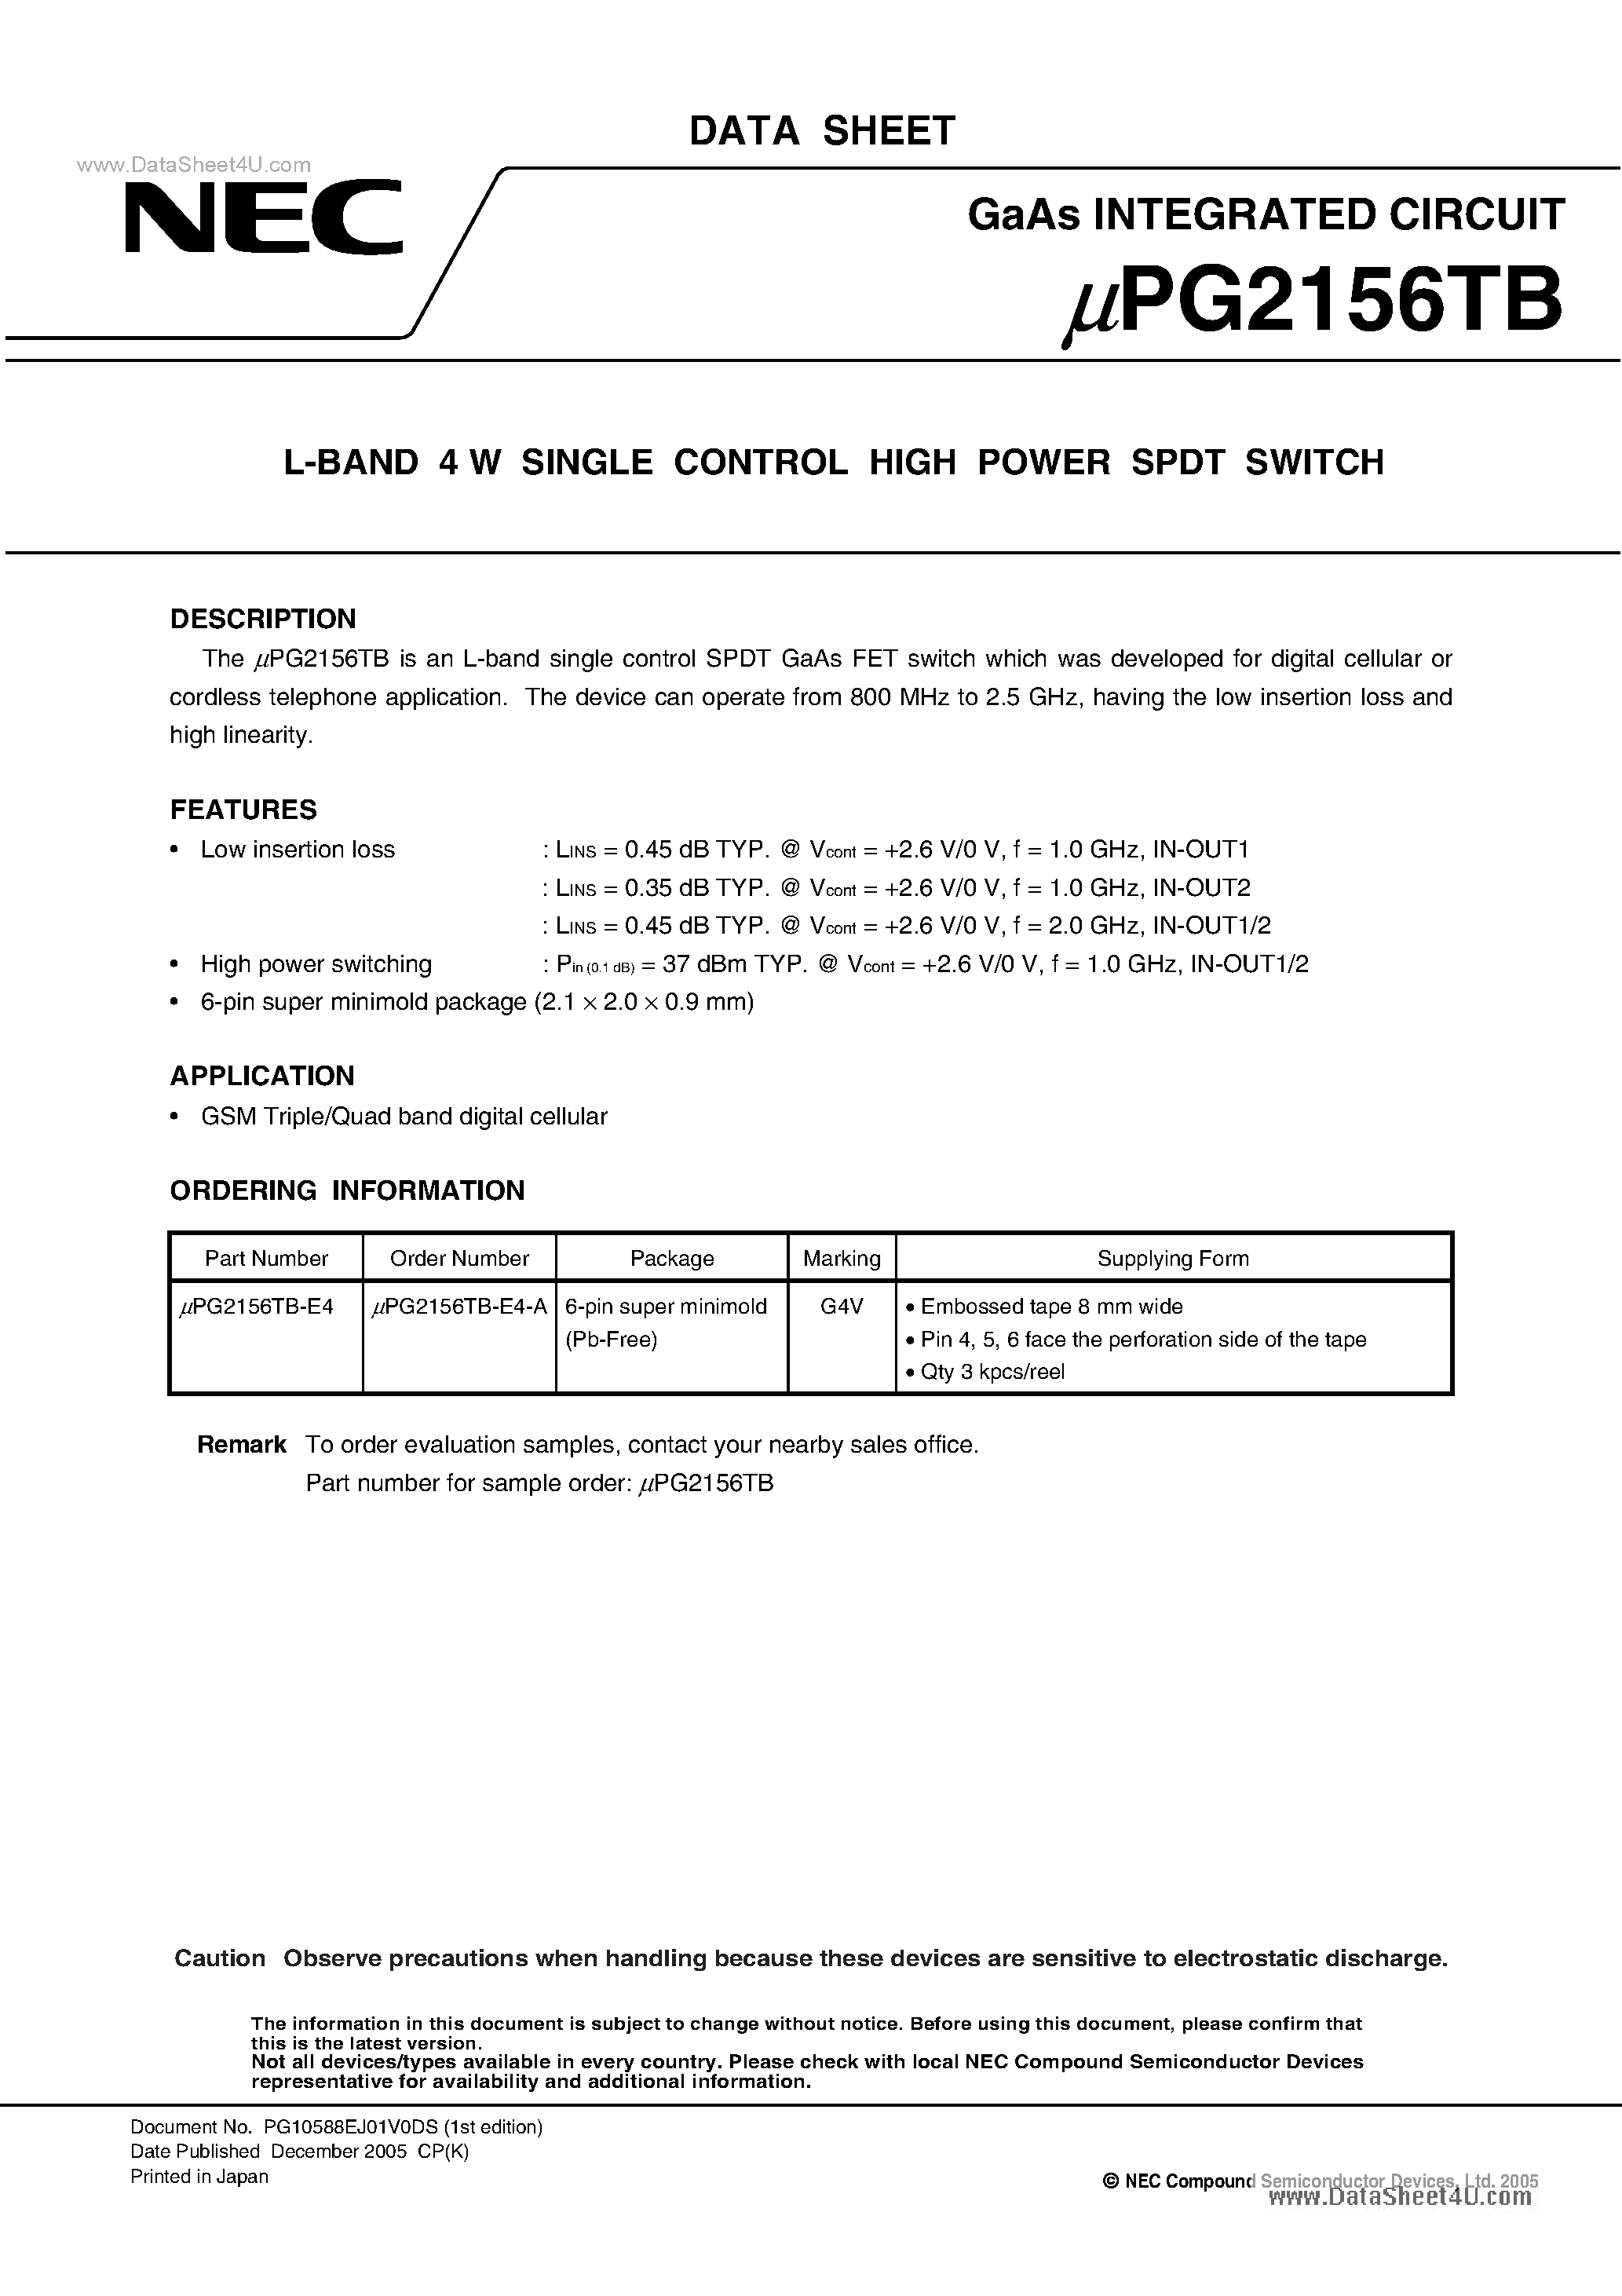 Даташит UPG2156TB - L-BAND 4 W SINGLE CONTROL HIGH POWER SPDT SWITCH страница 1